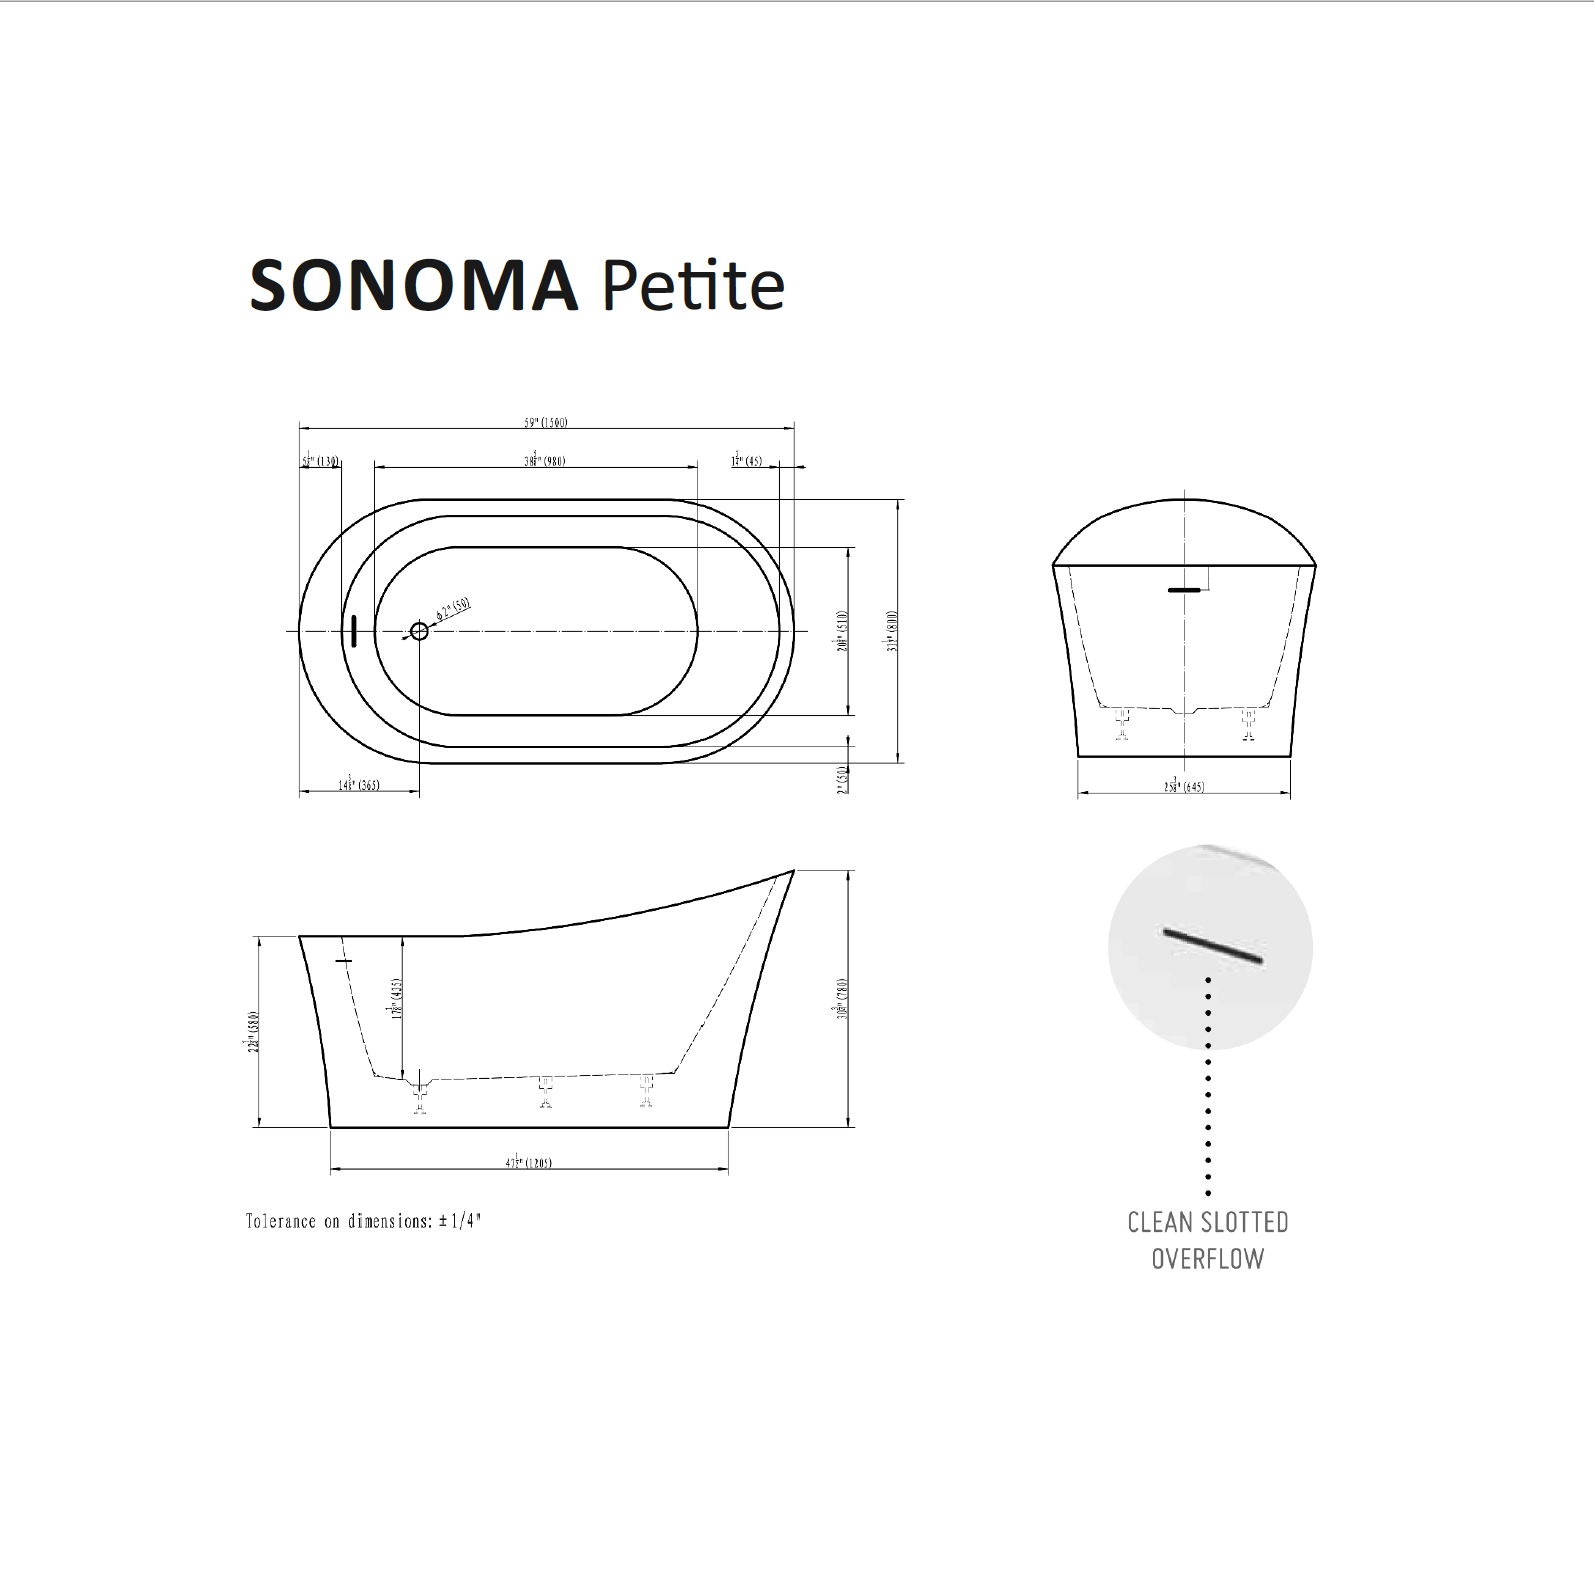 Sonoma Petite Tub Specifications